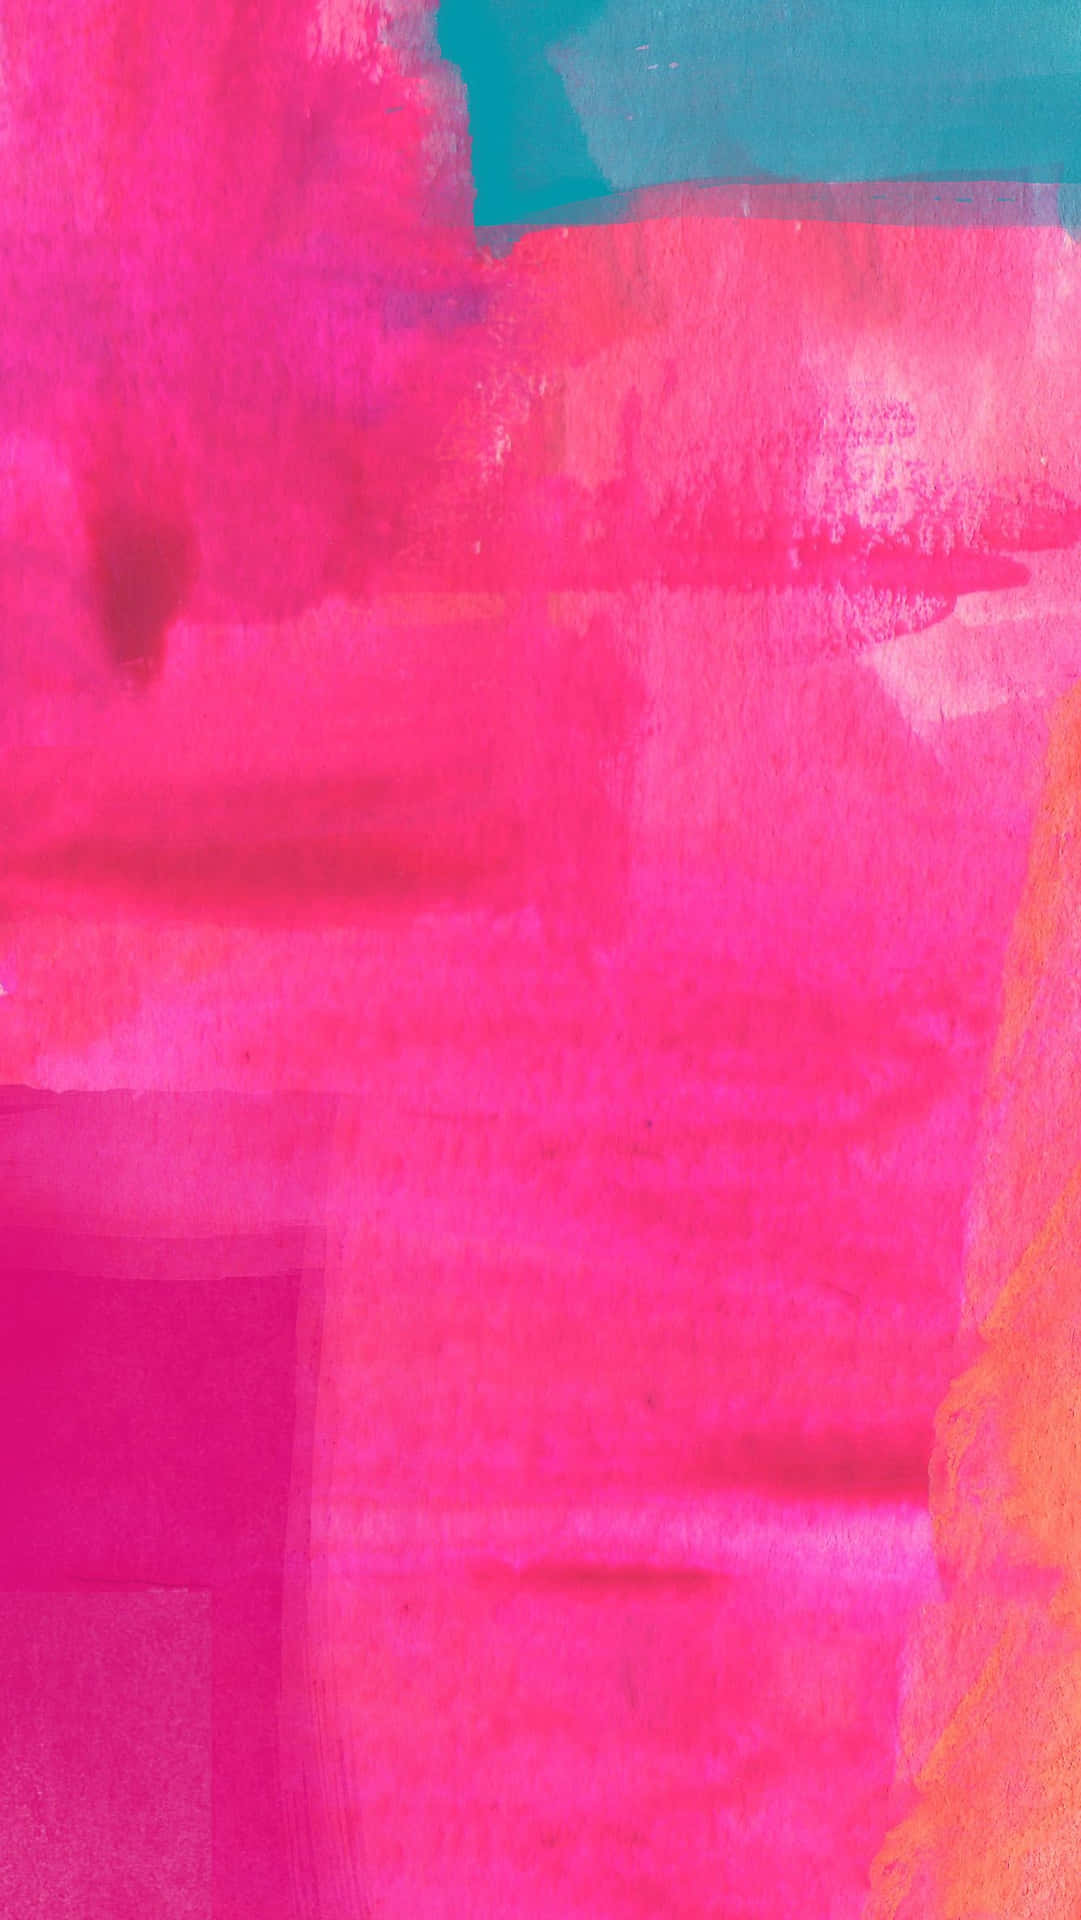 Joyful Vibes: A Bright Pink Background